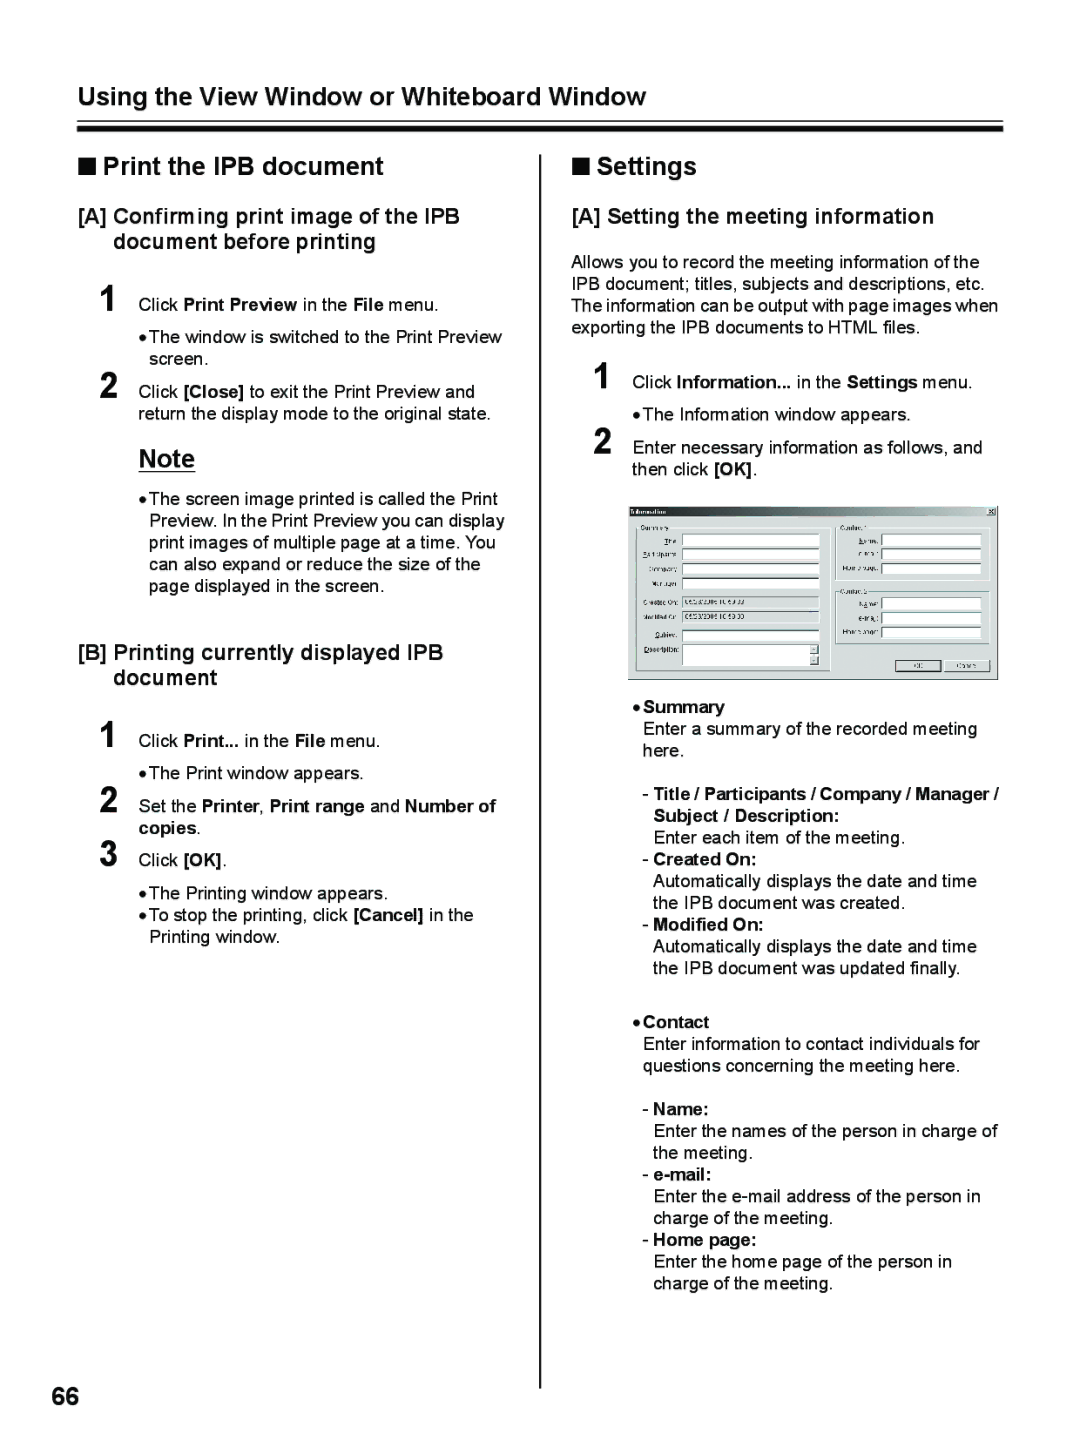 Panasonic UB-8325 Settings, Confirming print image of the IPB document before printing, Setting the meeting information 